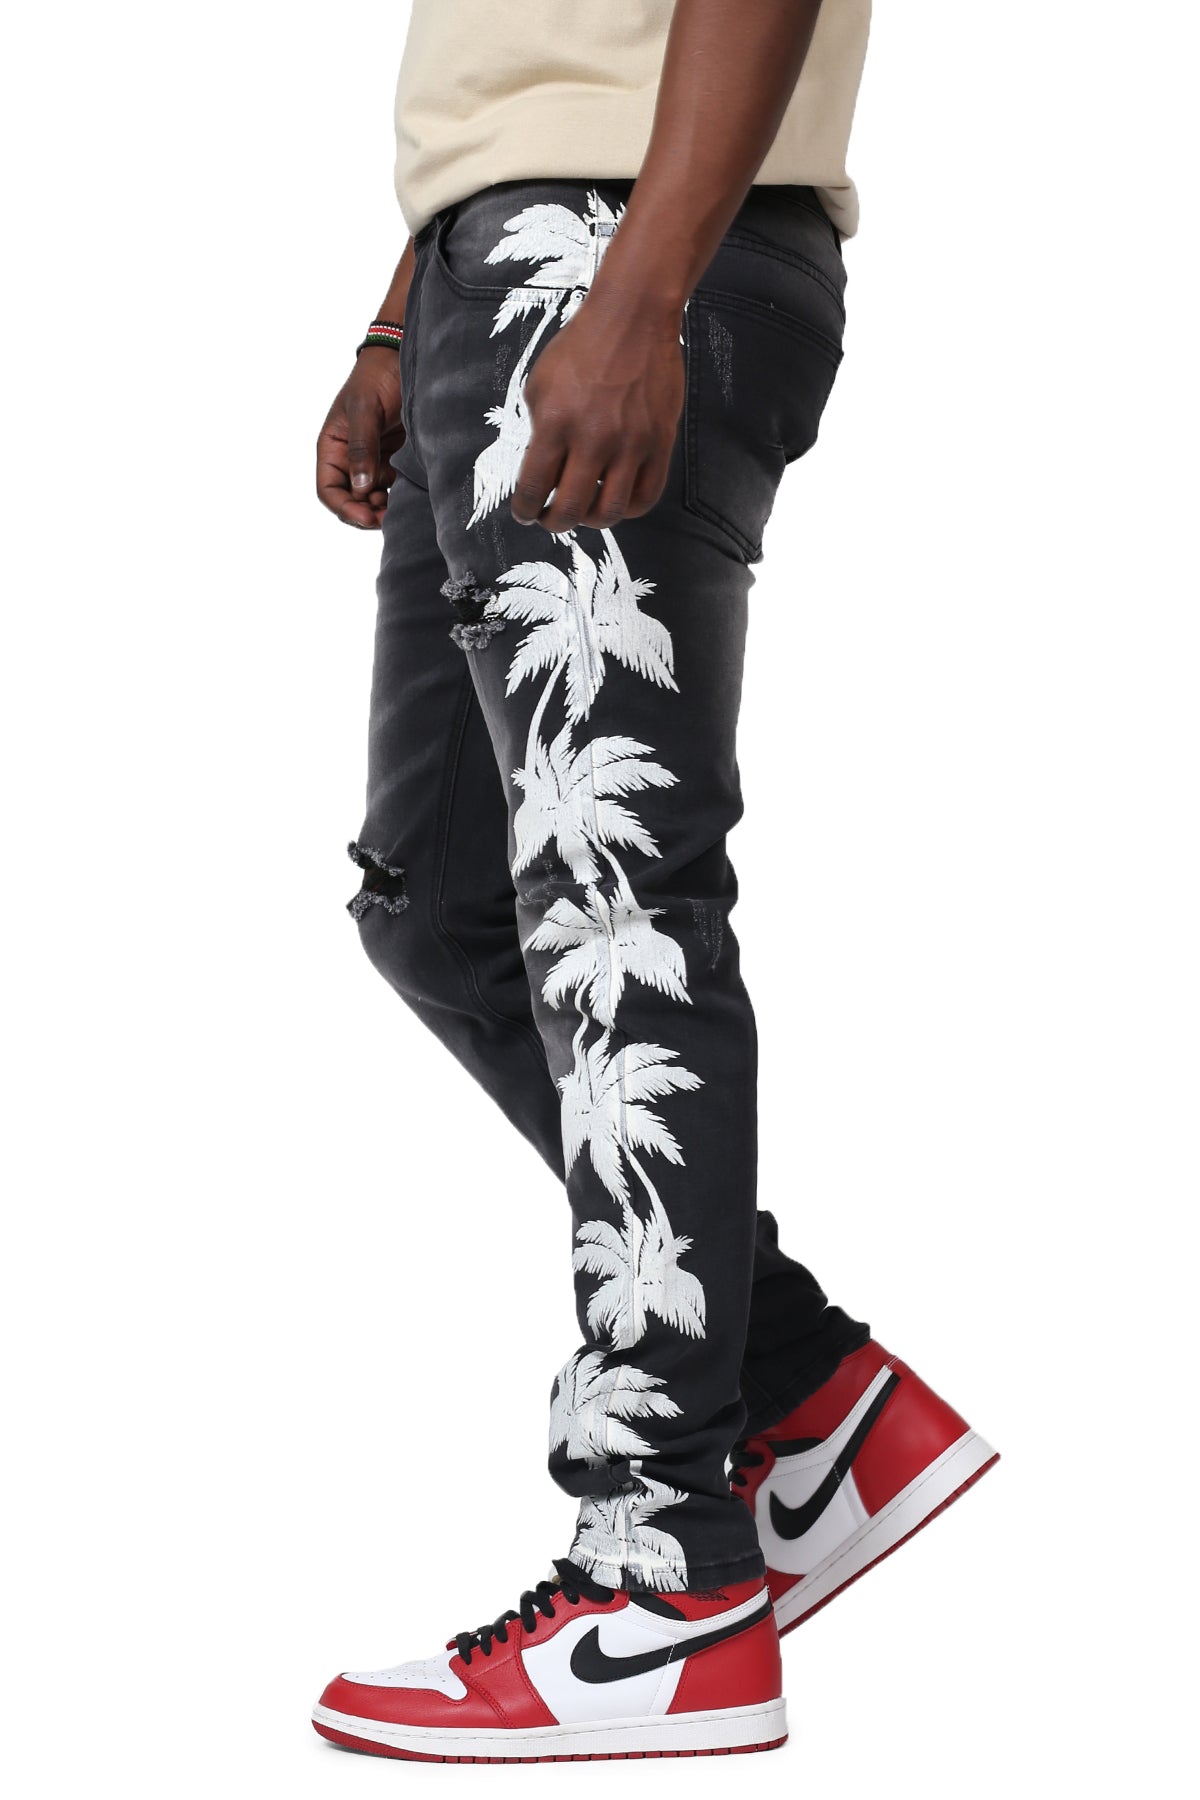 Palm Tree Jeans (Black) (6627537256550)